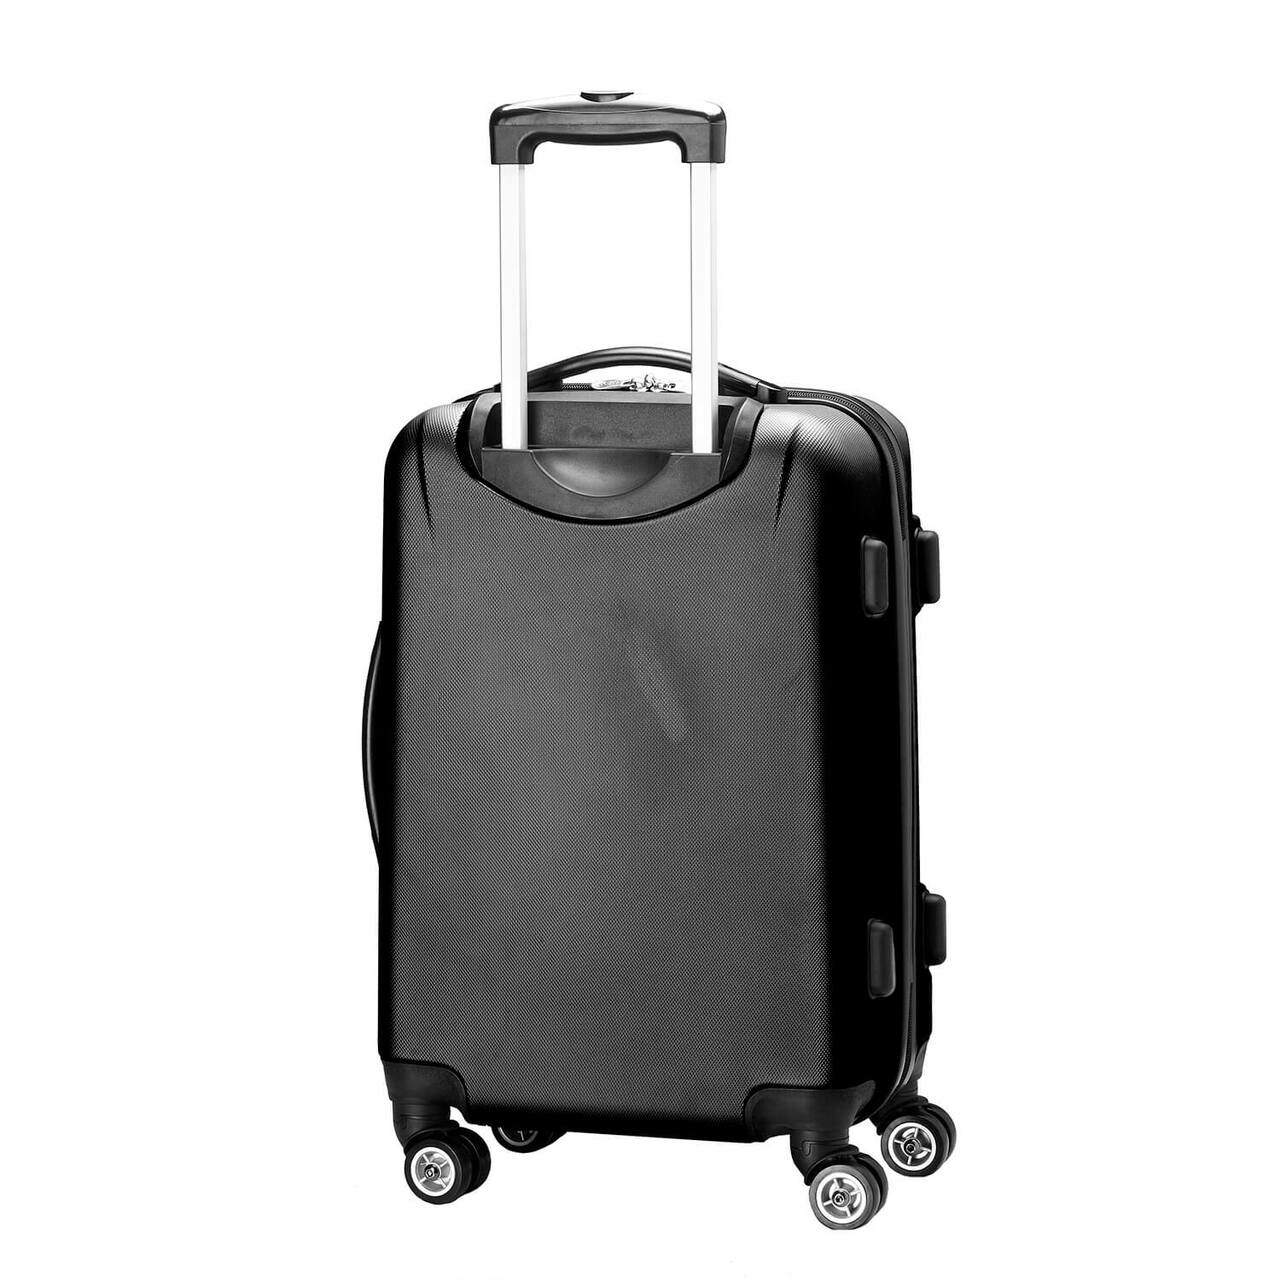 Minnesota Twins 20" Hardcase Luggage Carry-on Spinner